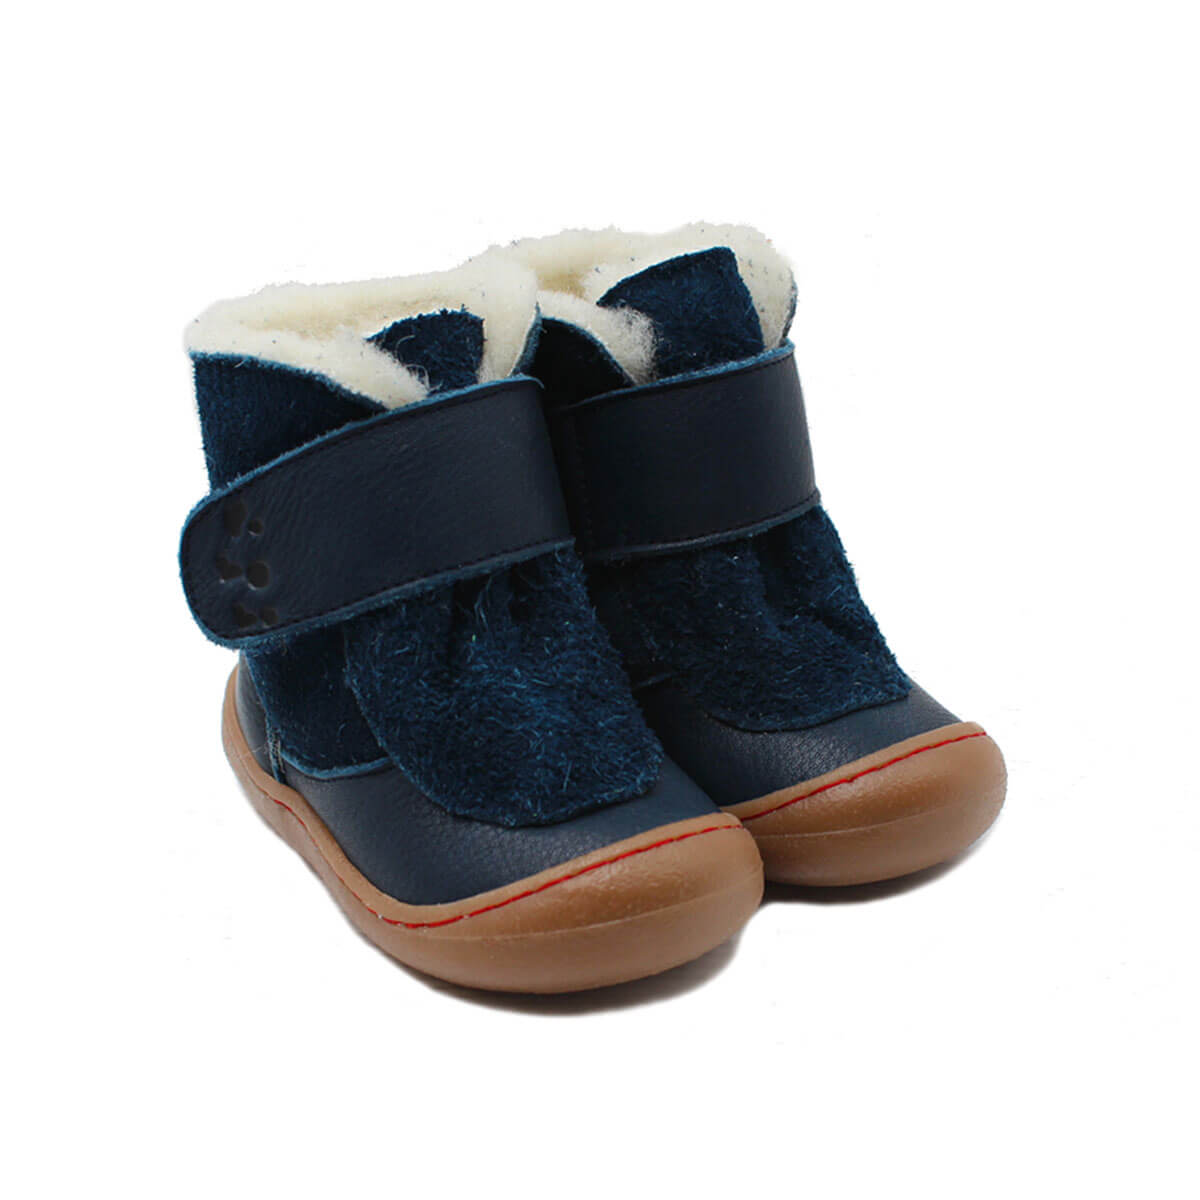 Ghete iarna barefoot cu lana pentru bebelusi si copii Pololo Karla, Albastru